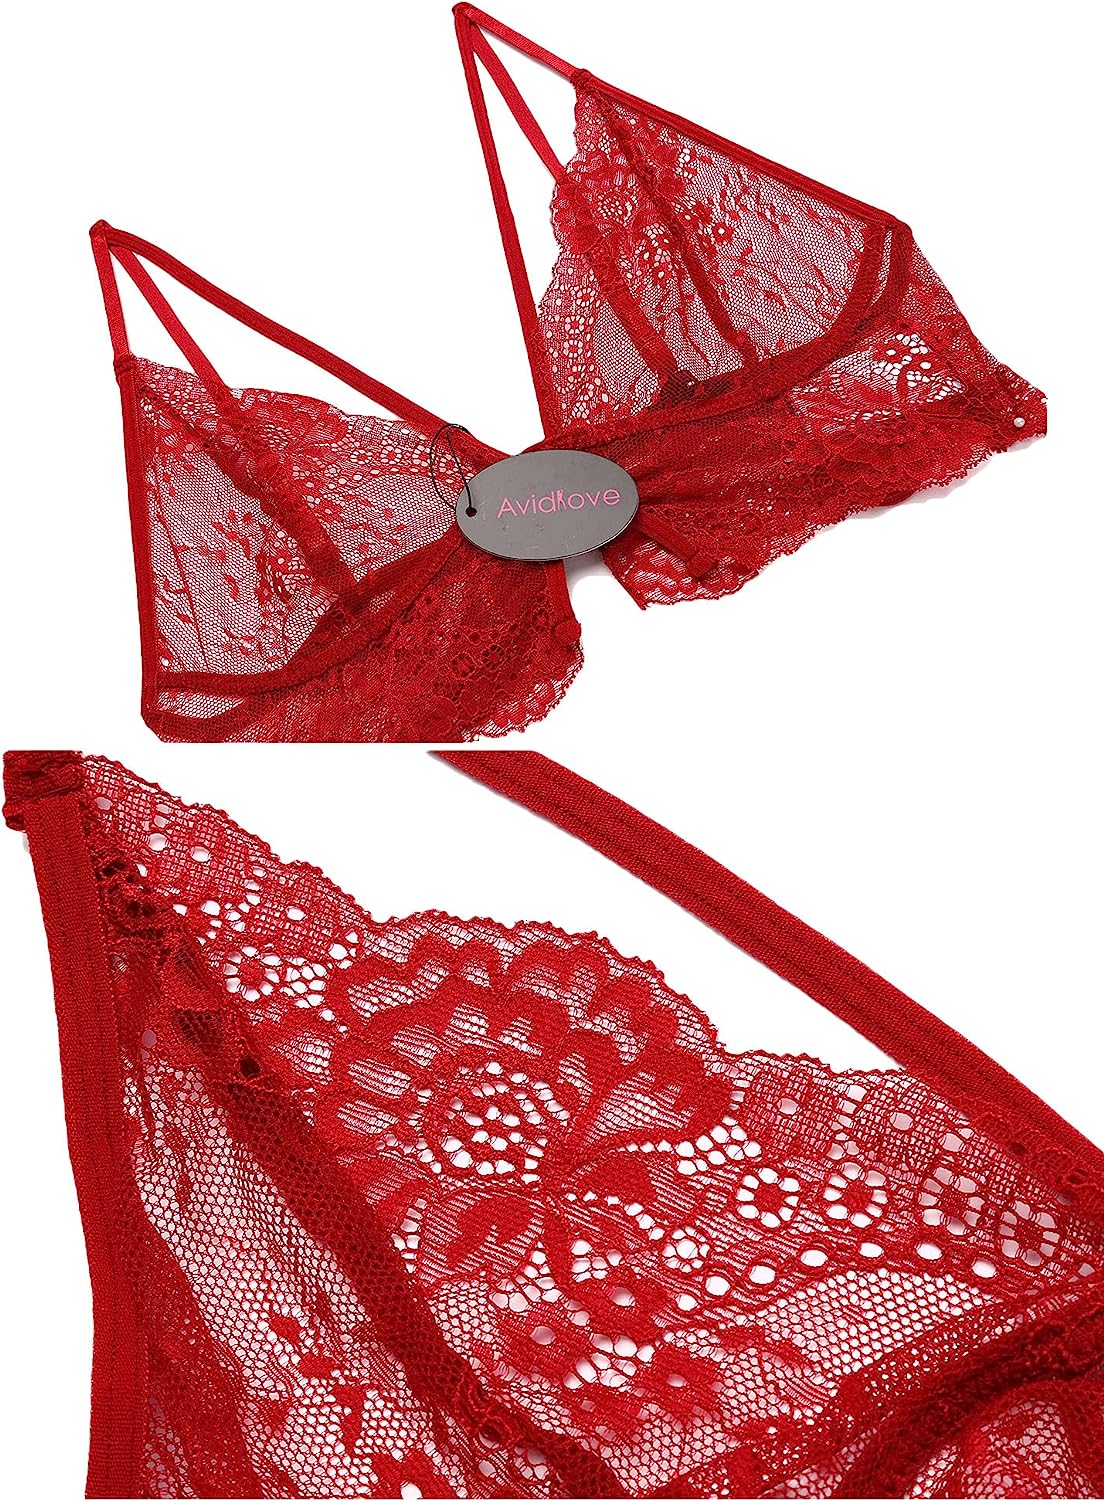 Avidlove Garter Lingerie Set Eyelash Lace Strappy Bra and Panty 3 piece Boudoir Outfits